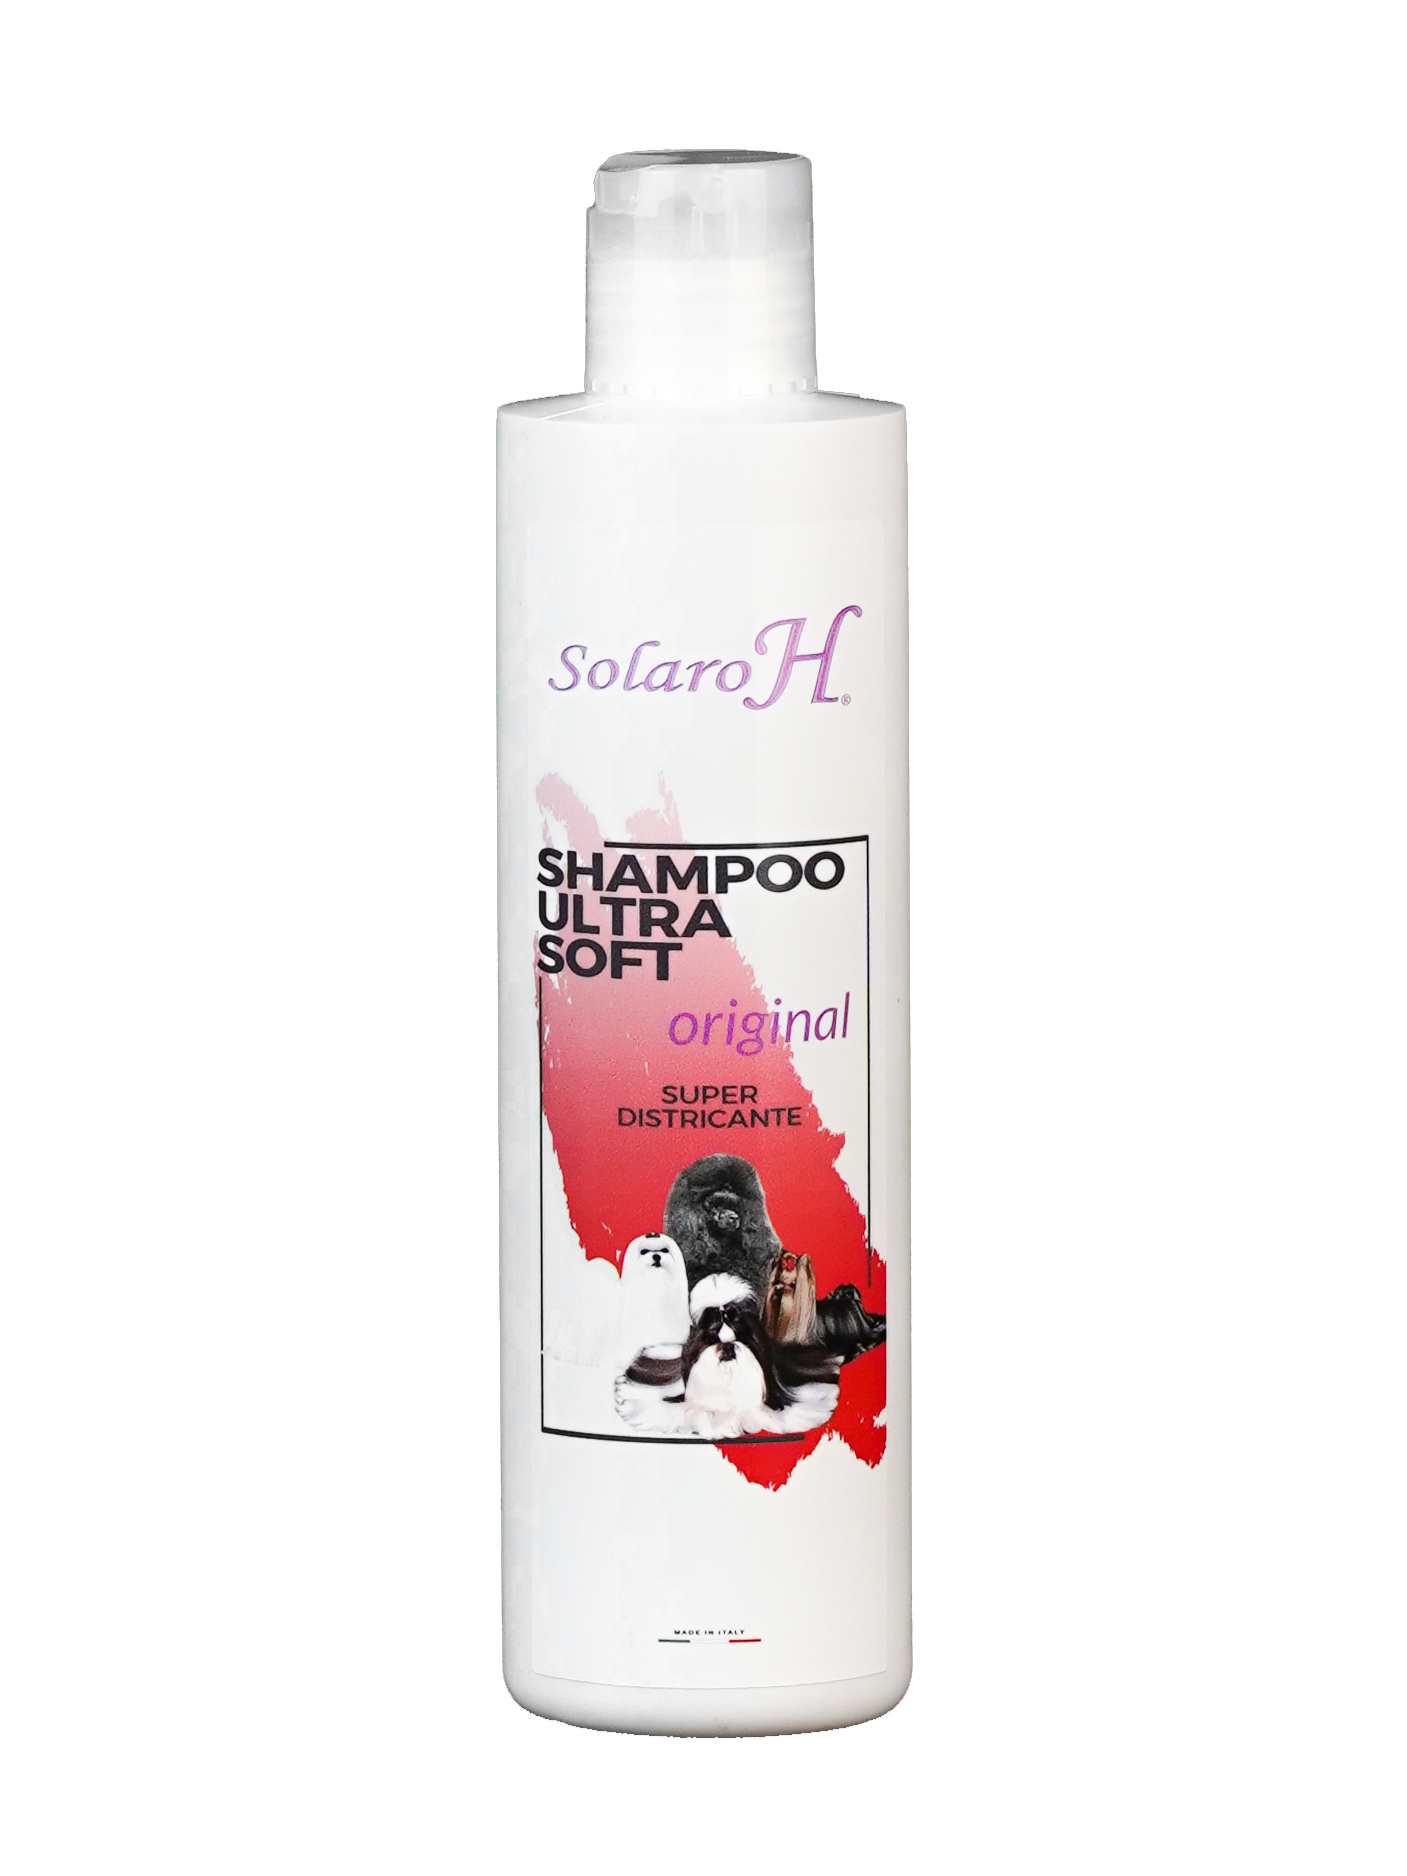 Solaro H Shampoo Ultra Soft